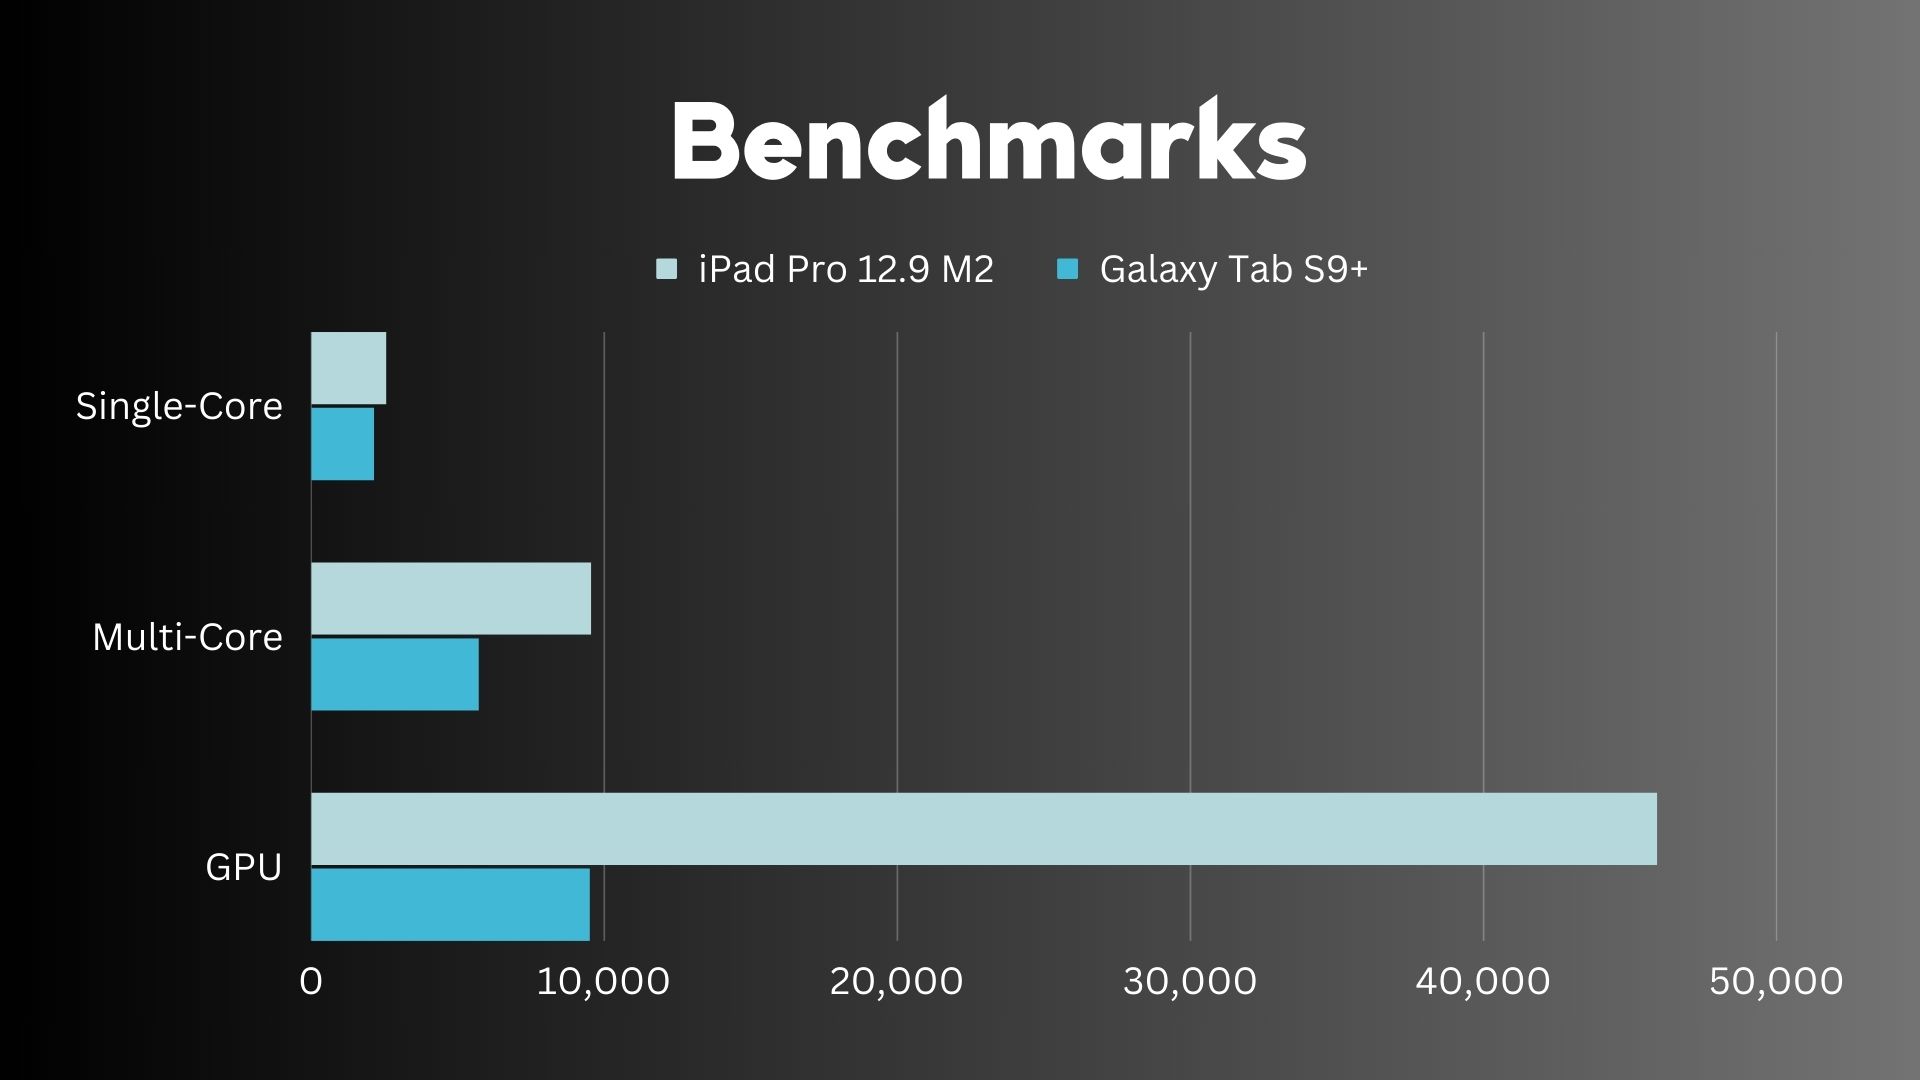 Benchmarks ipad pro vs galaxy tab s9+